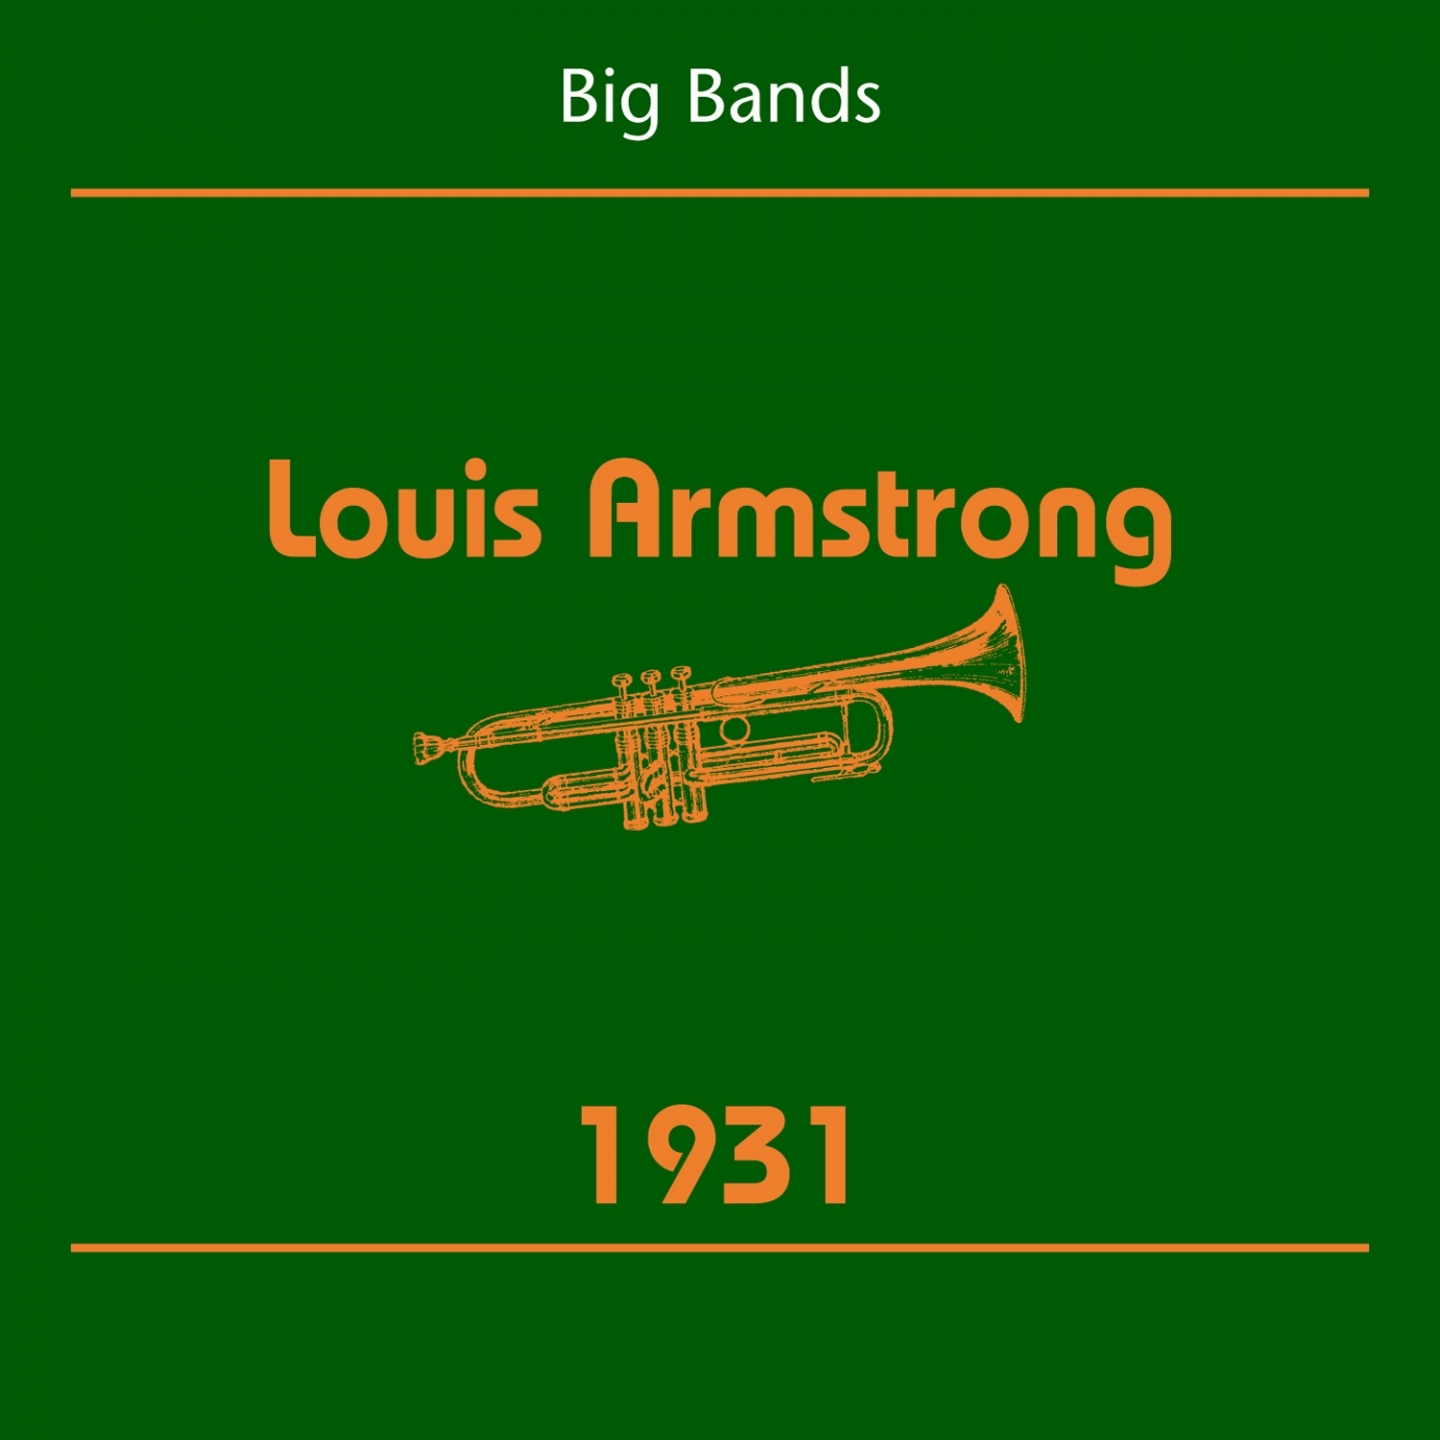 Big Bands (Louis Armstrong 1931)